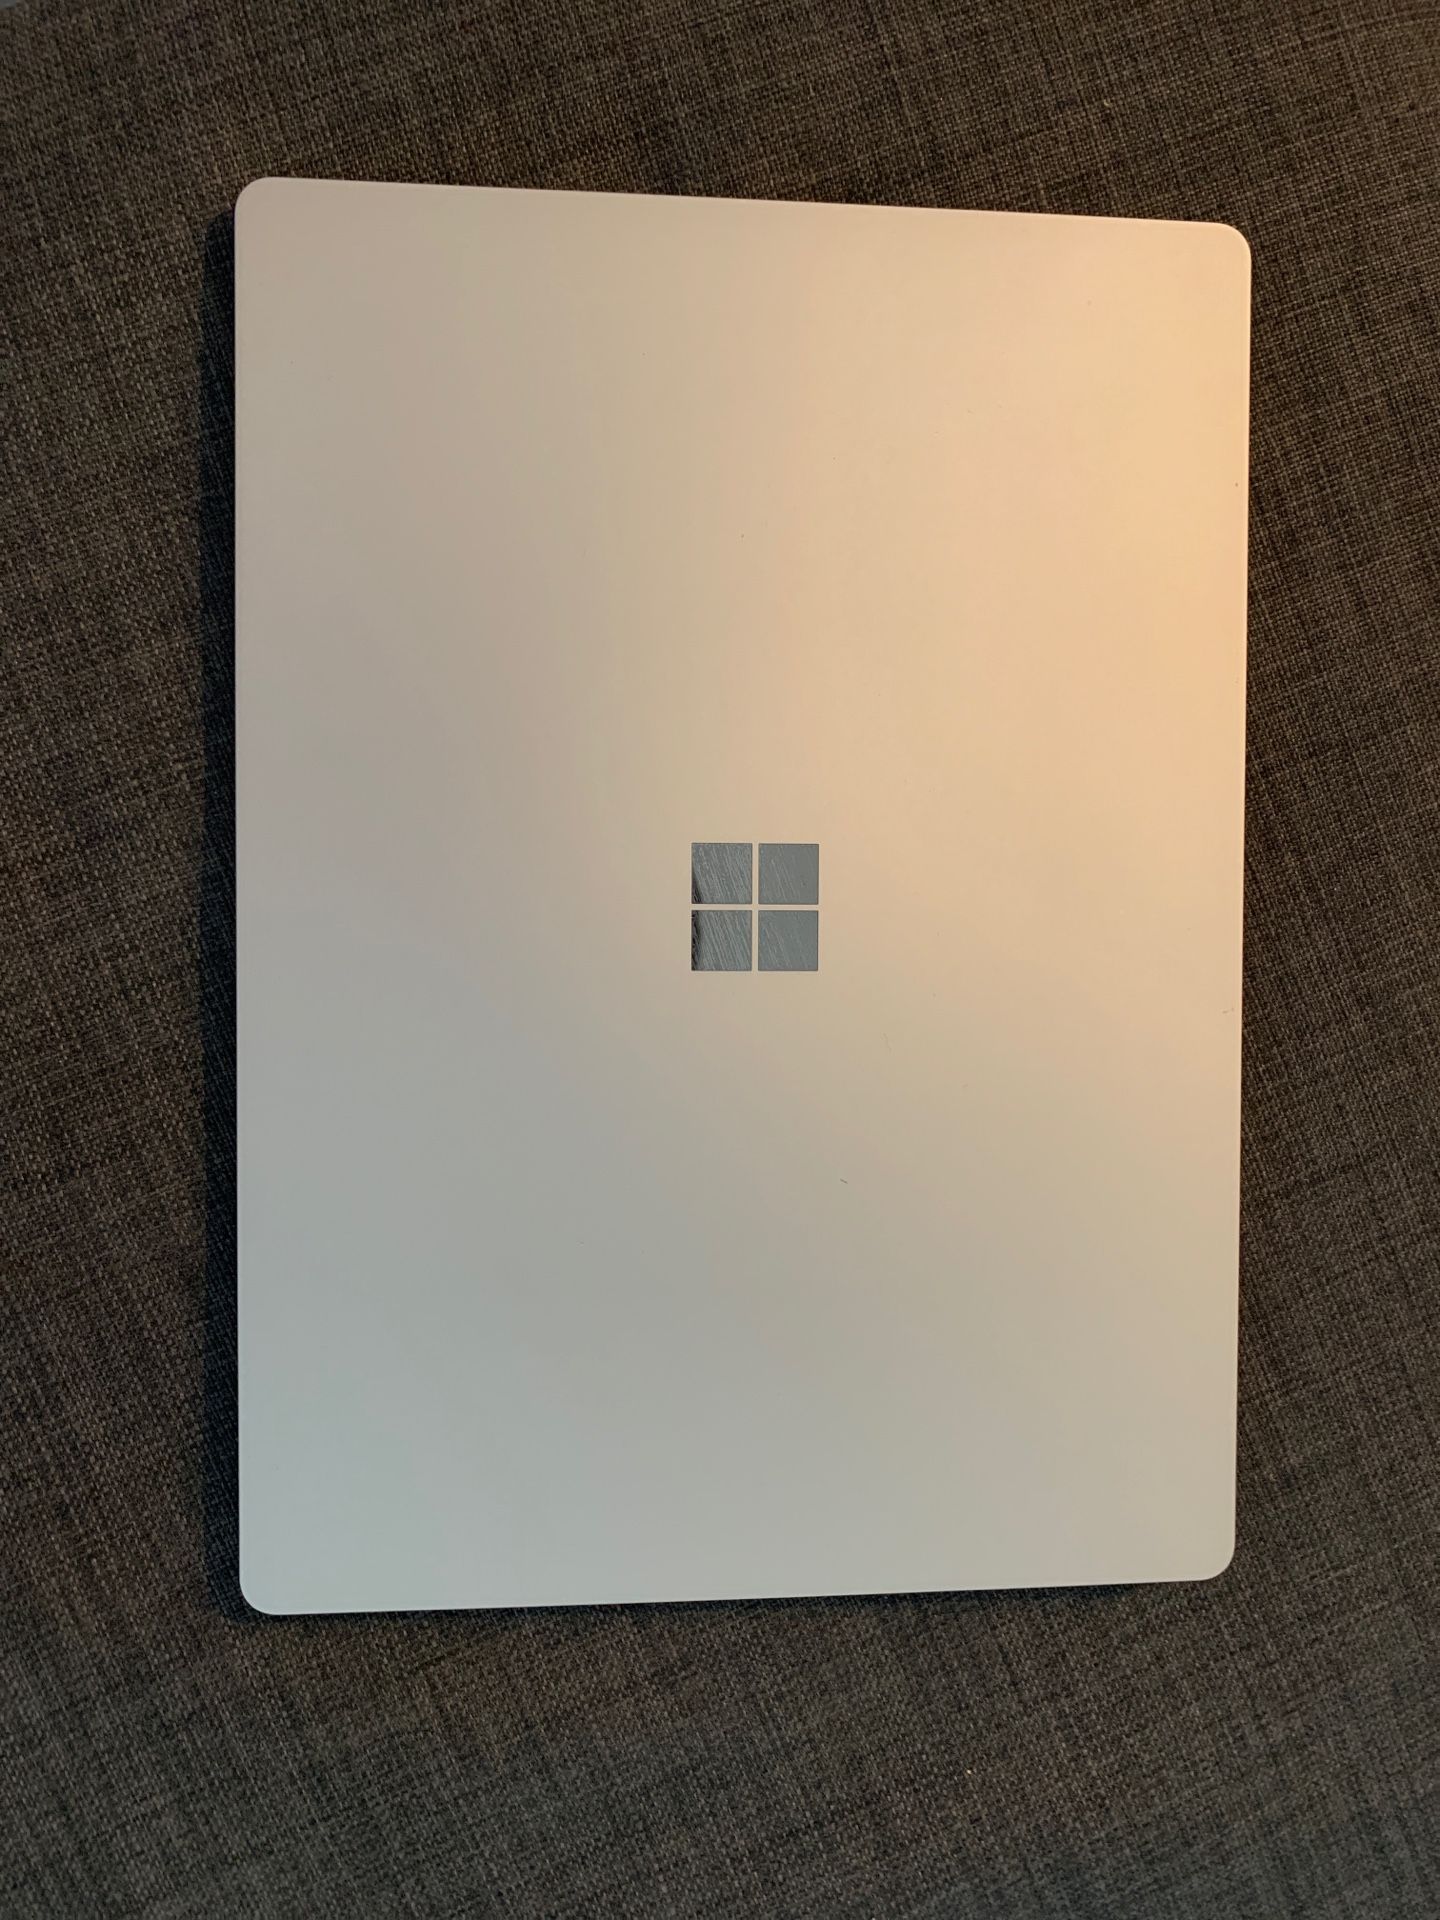 Microsoft Surface Laptop 2 8th Gen i7 processor/ 256GB SSD